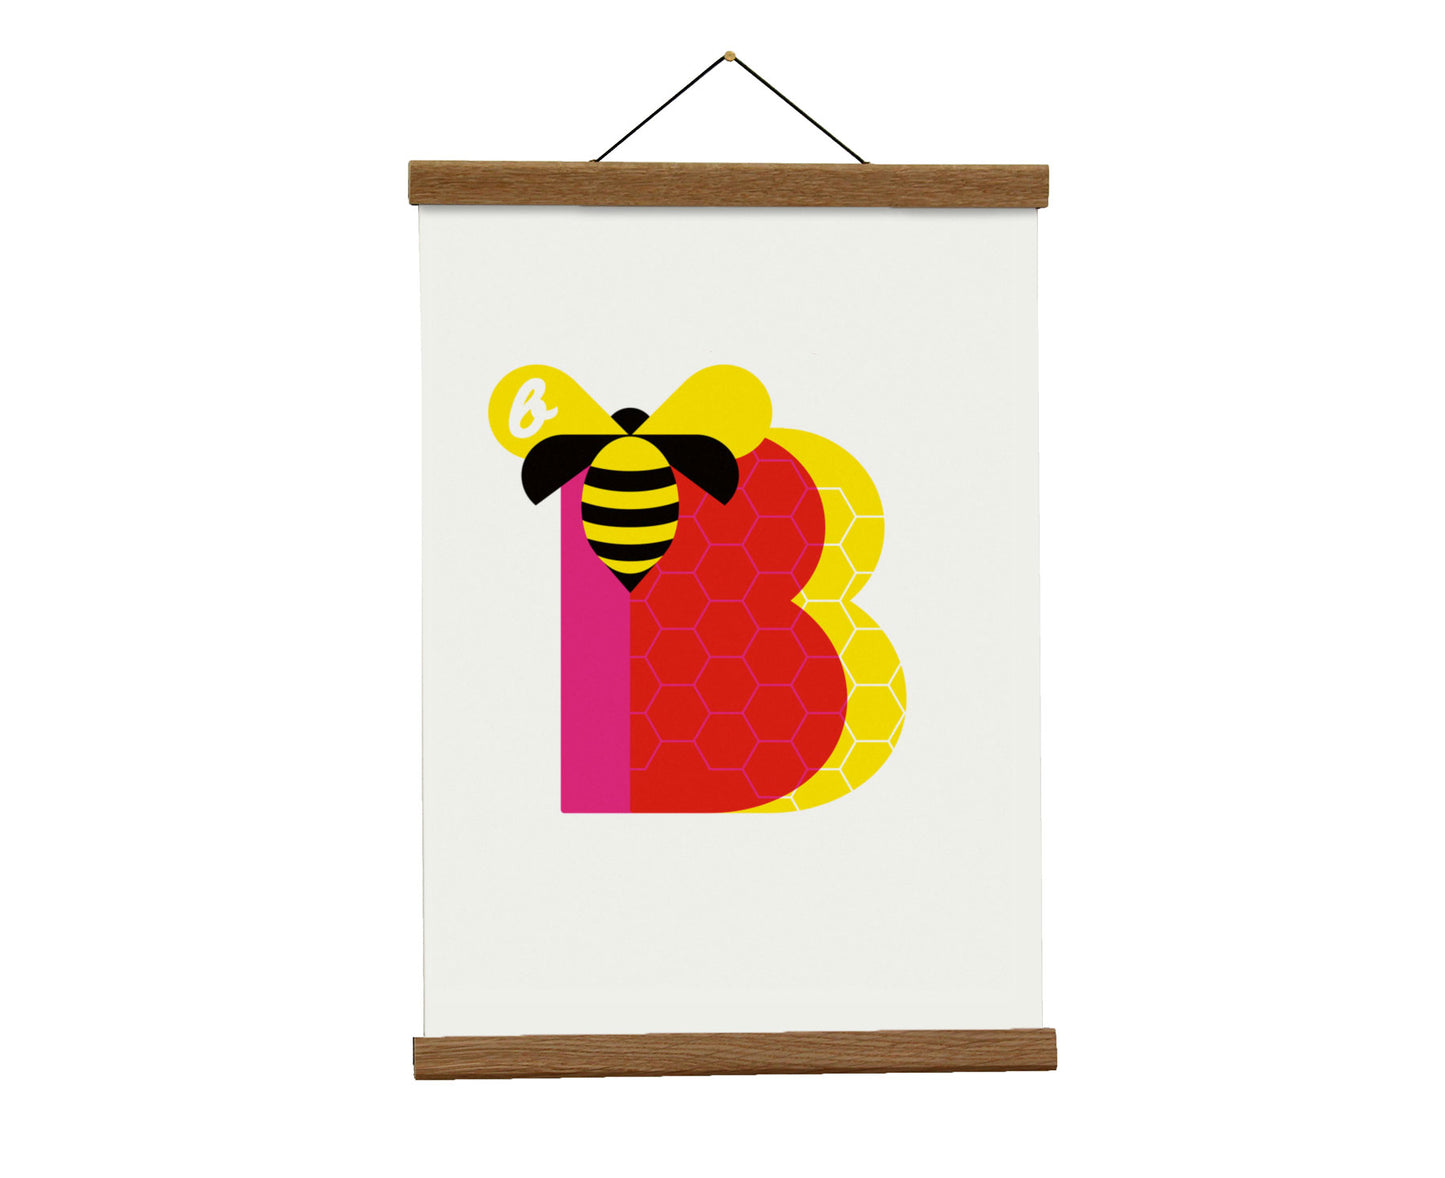 Letter B bee print